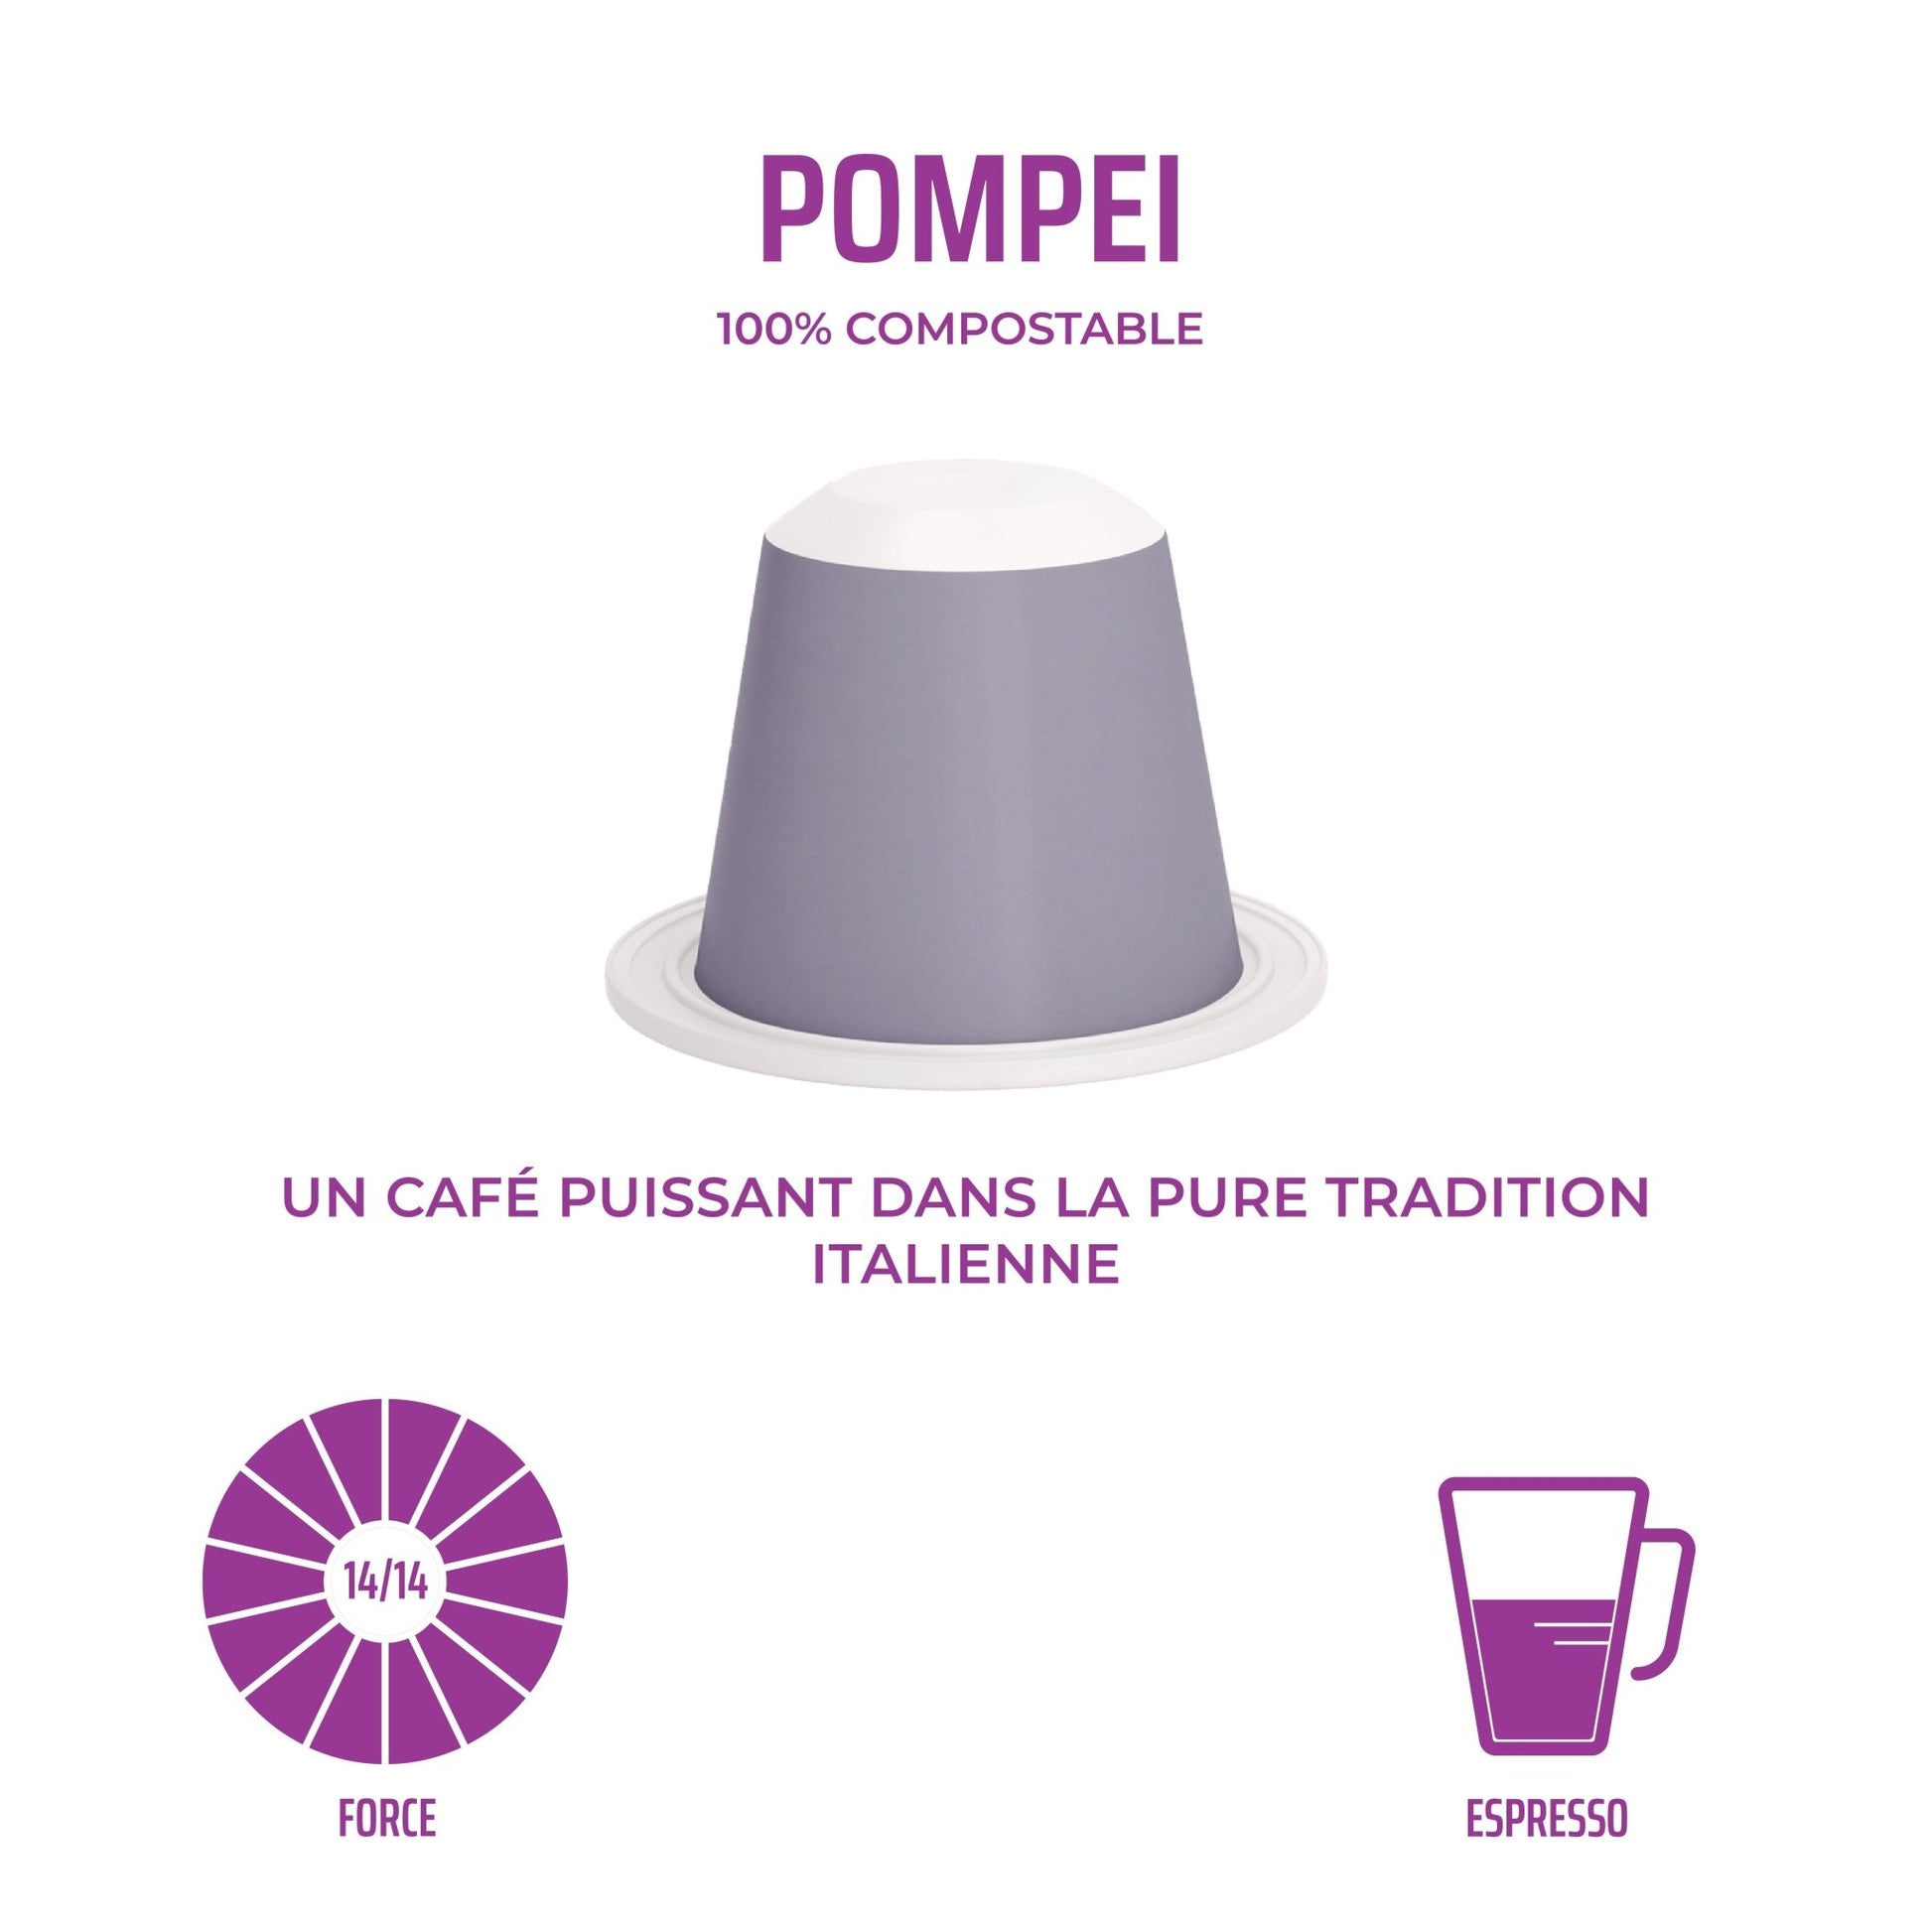 Capsules compostables x 10 - Nespresso® - Pompei "Ristretto" - Cafegraal